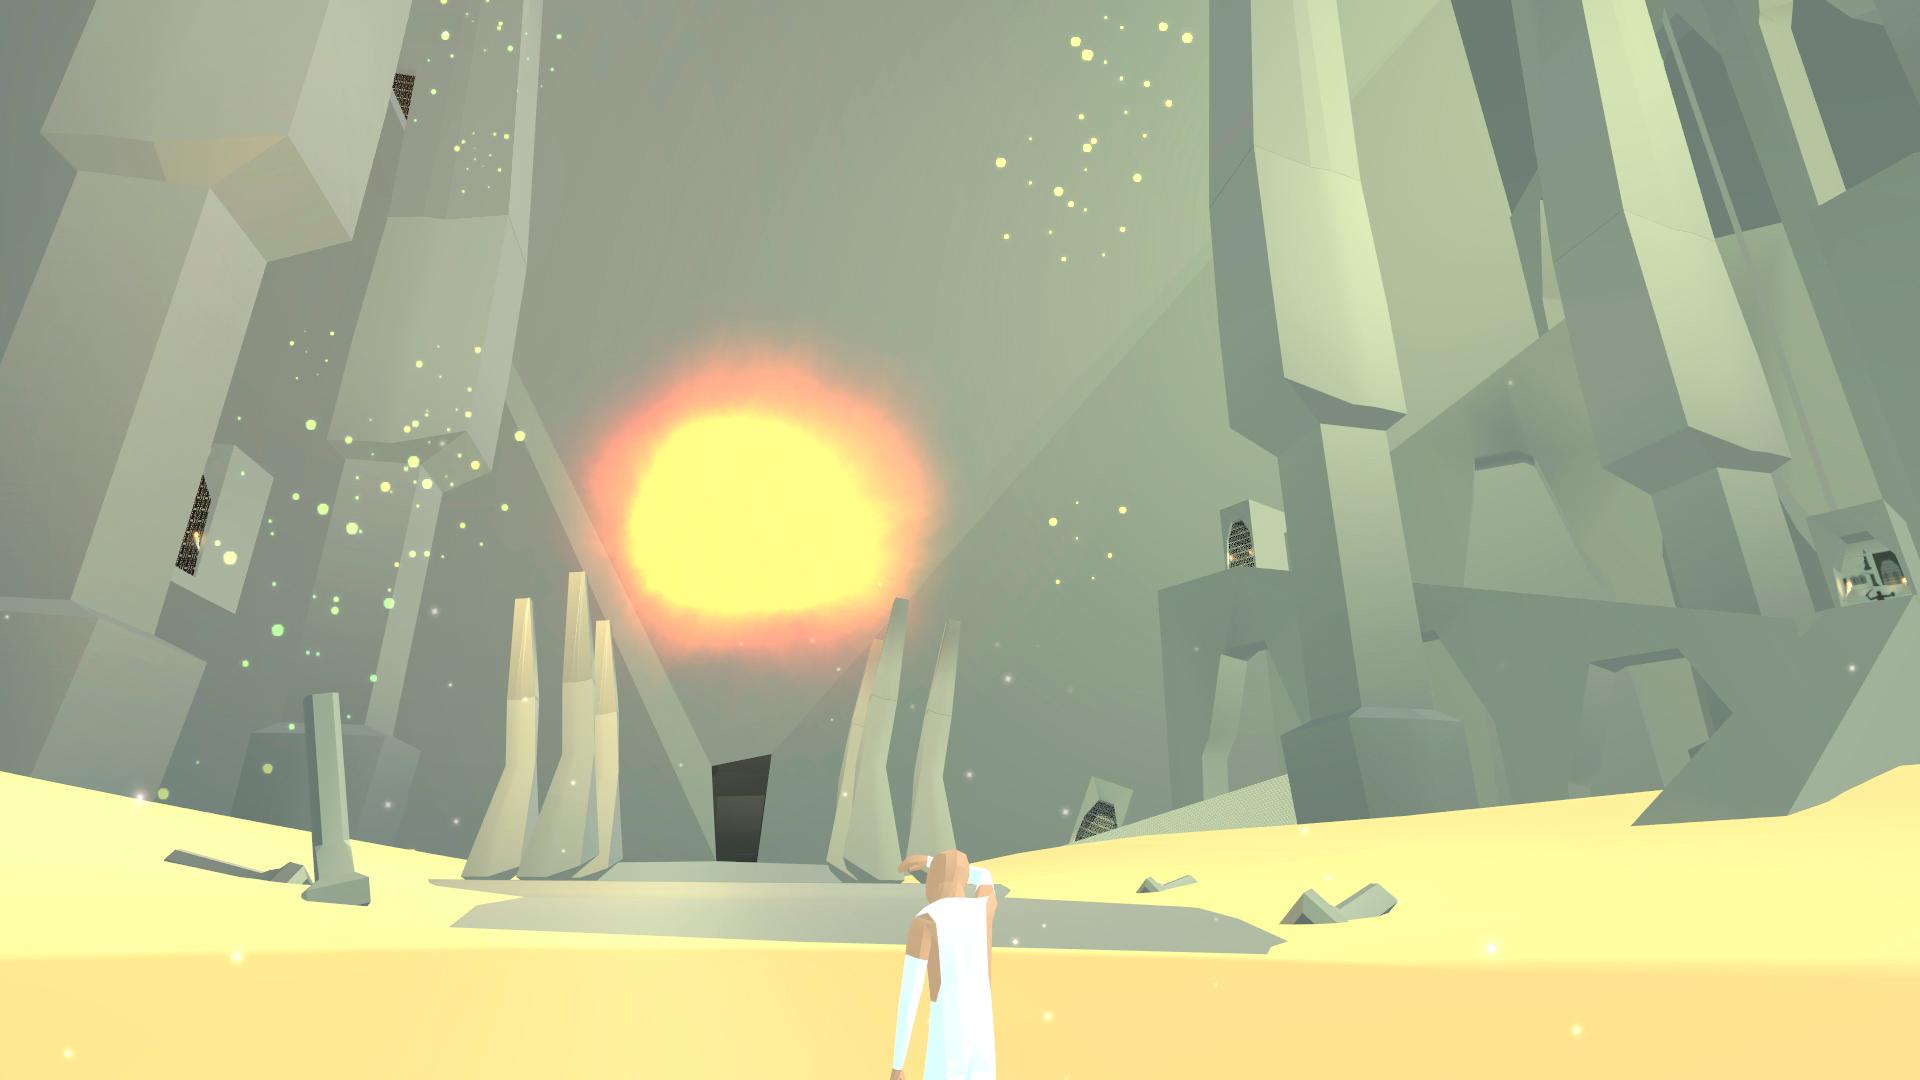 Screenshot №12 from game Laraan